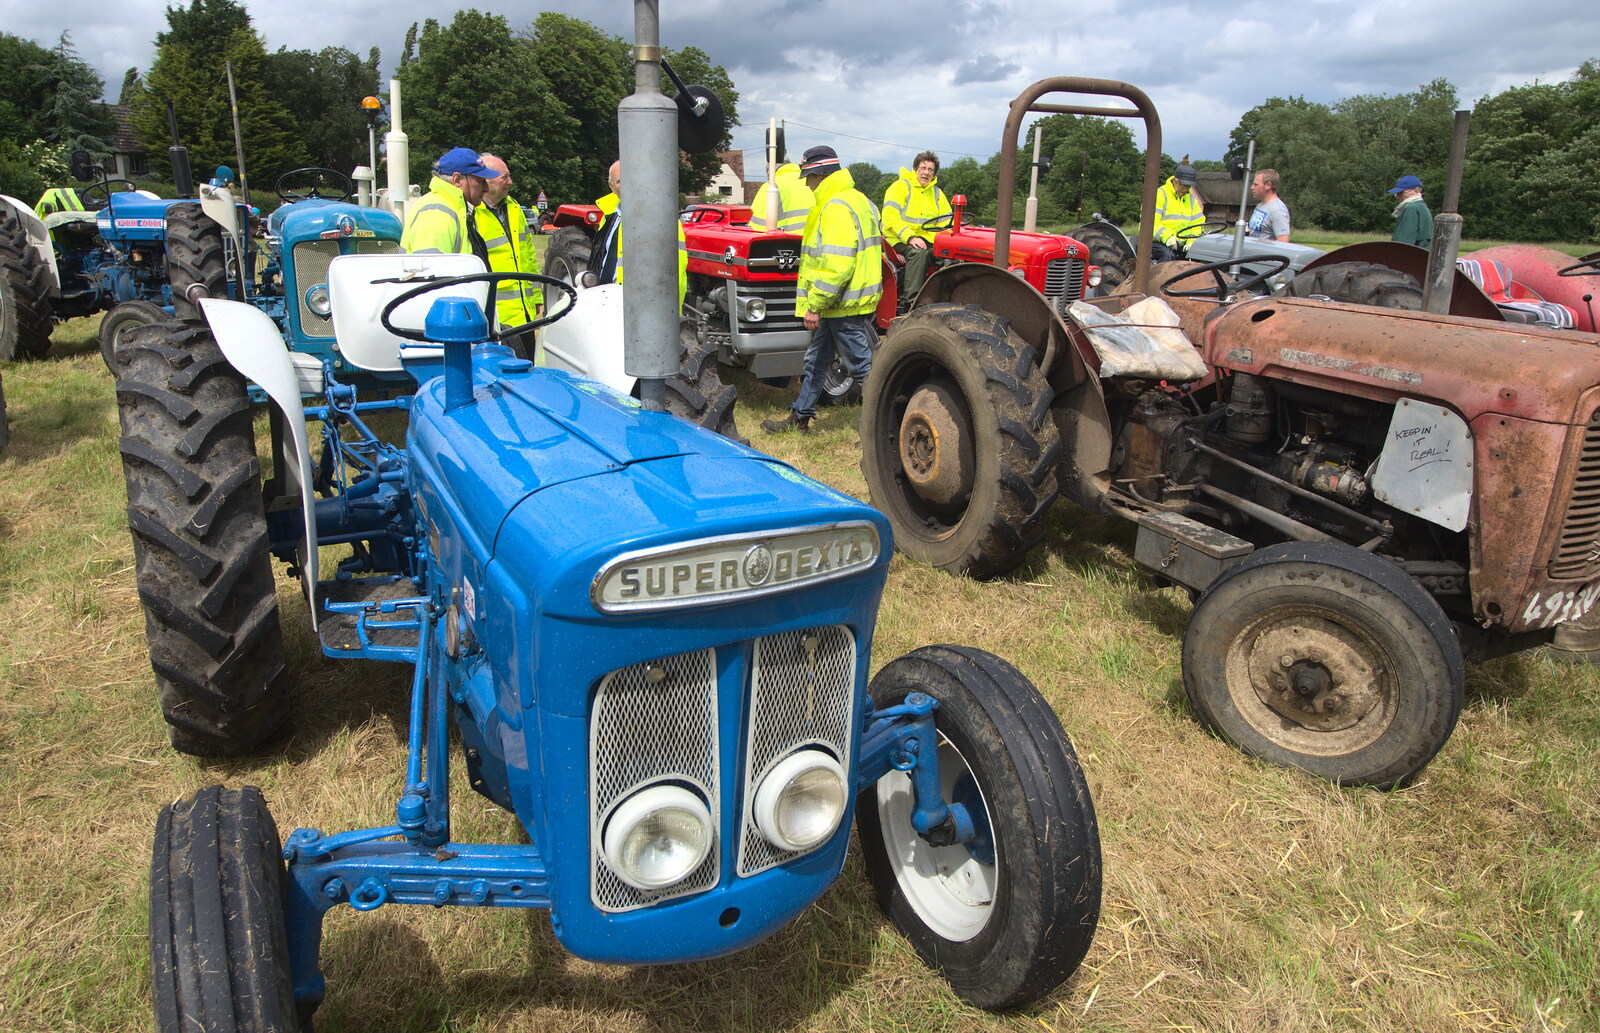 A 'Super Dexta' tractor from Thrandeston Pig Roast and Tractors, Thrandeston Little Green, Suffolk - 23rd June 2013